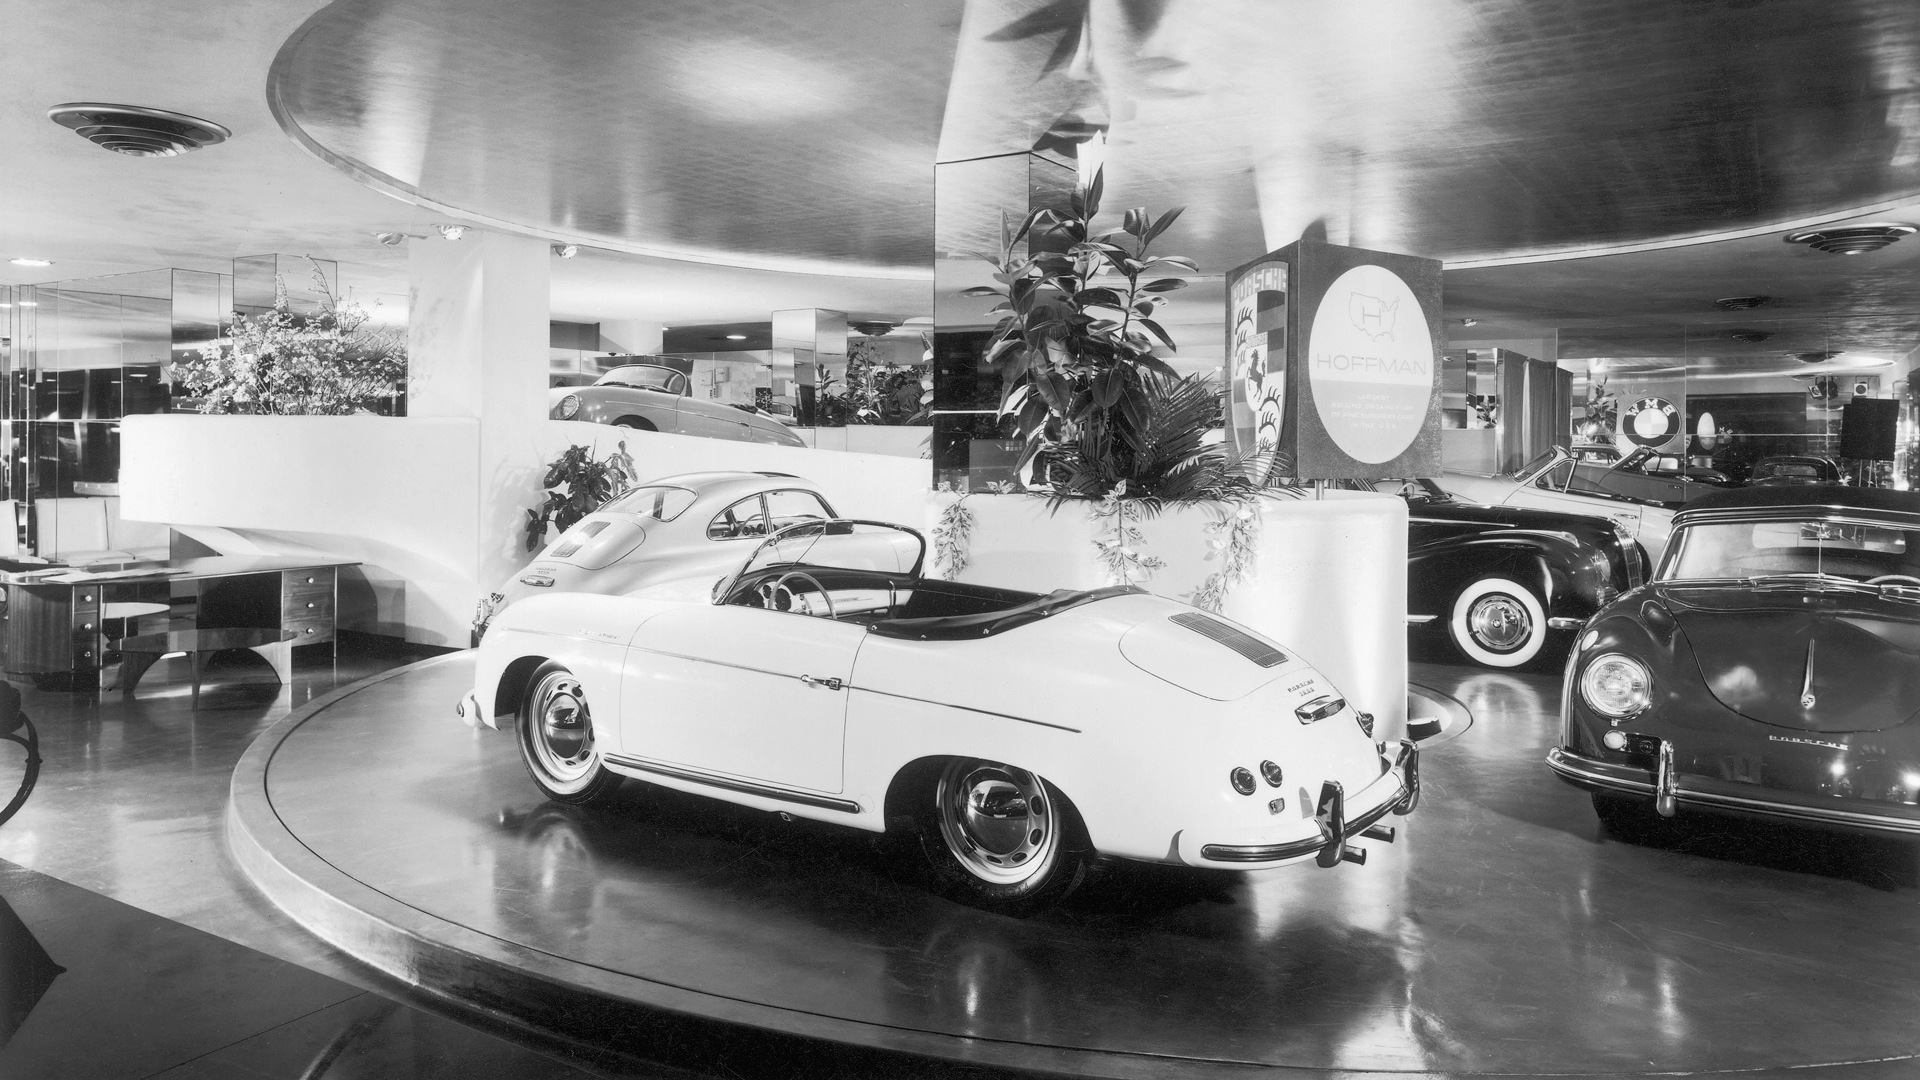 Porsches for sale at Hoffman Motor Car Company in New York City - circa 1954/1955